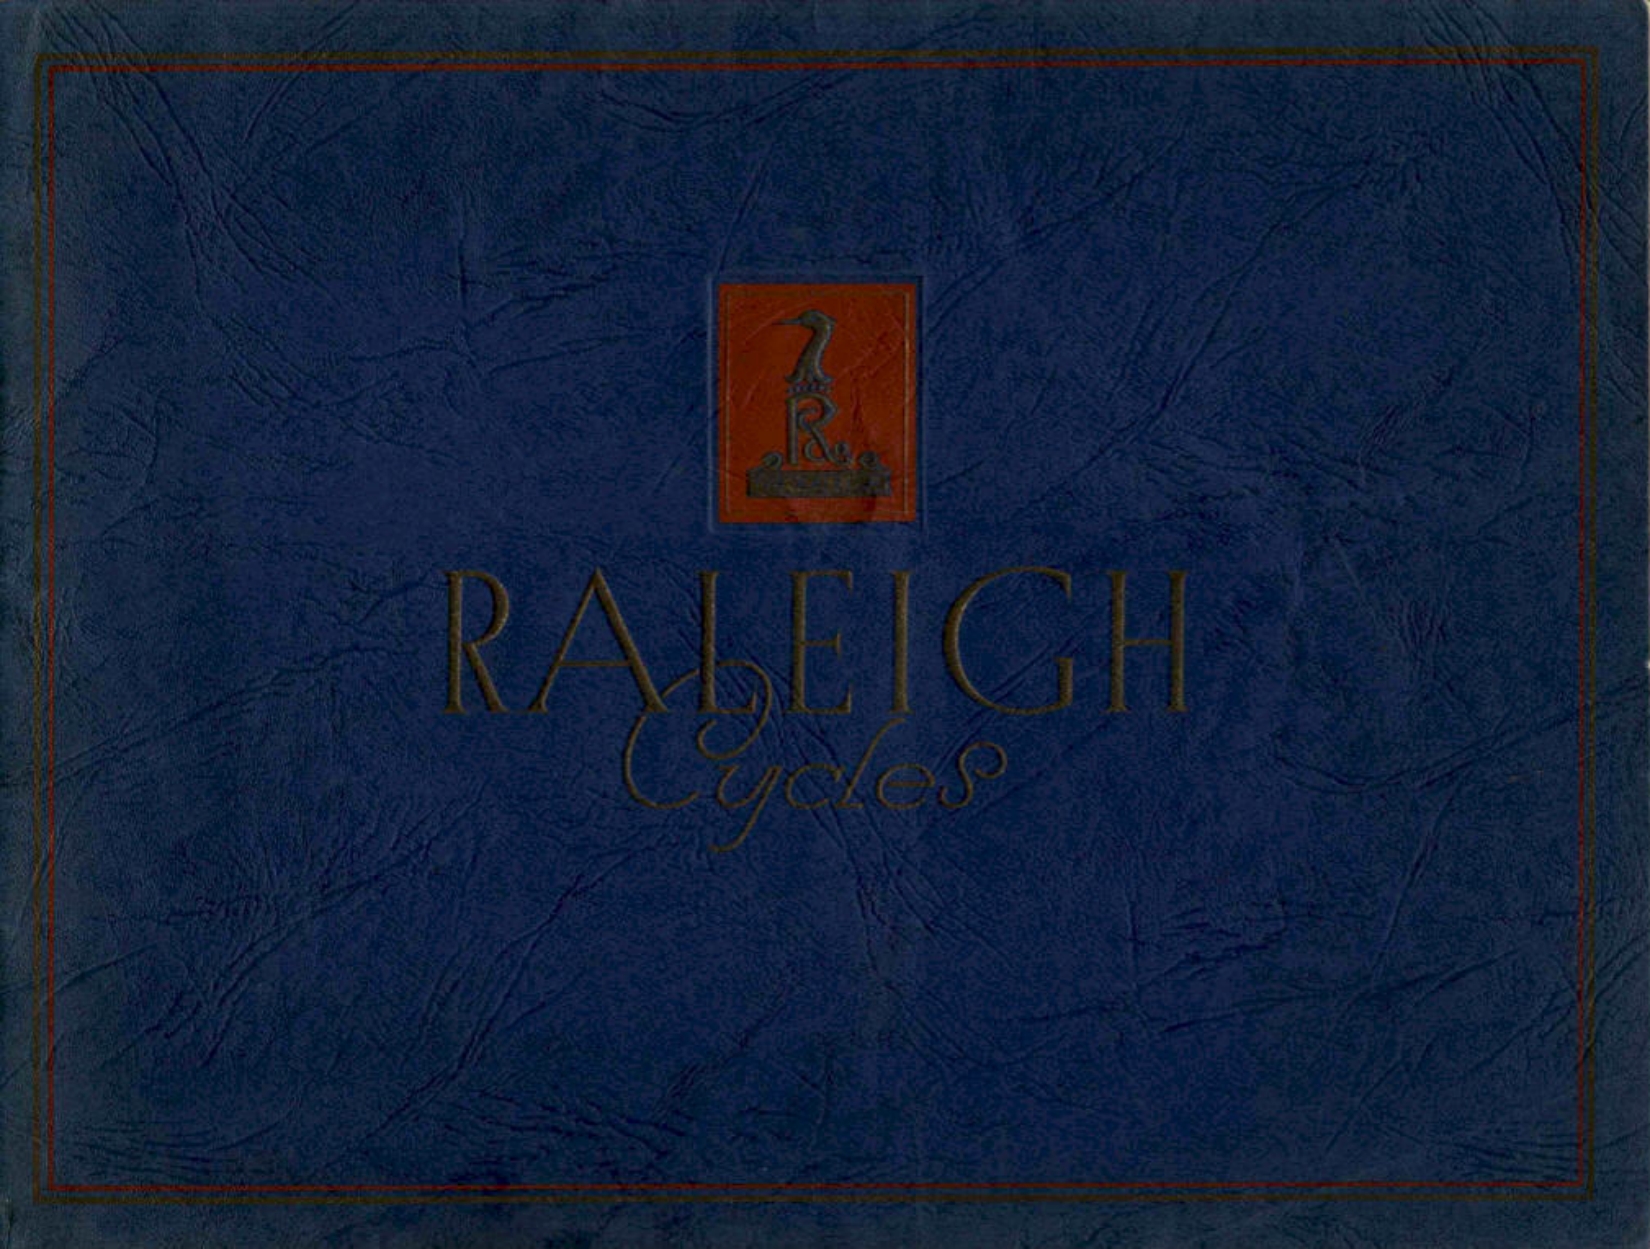 Raleigh catalog (1936)